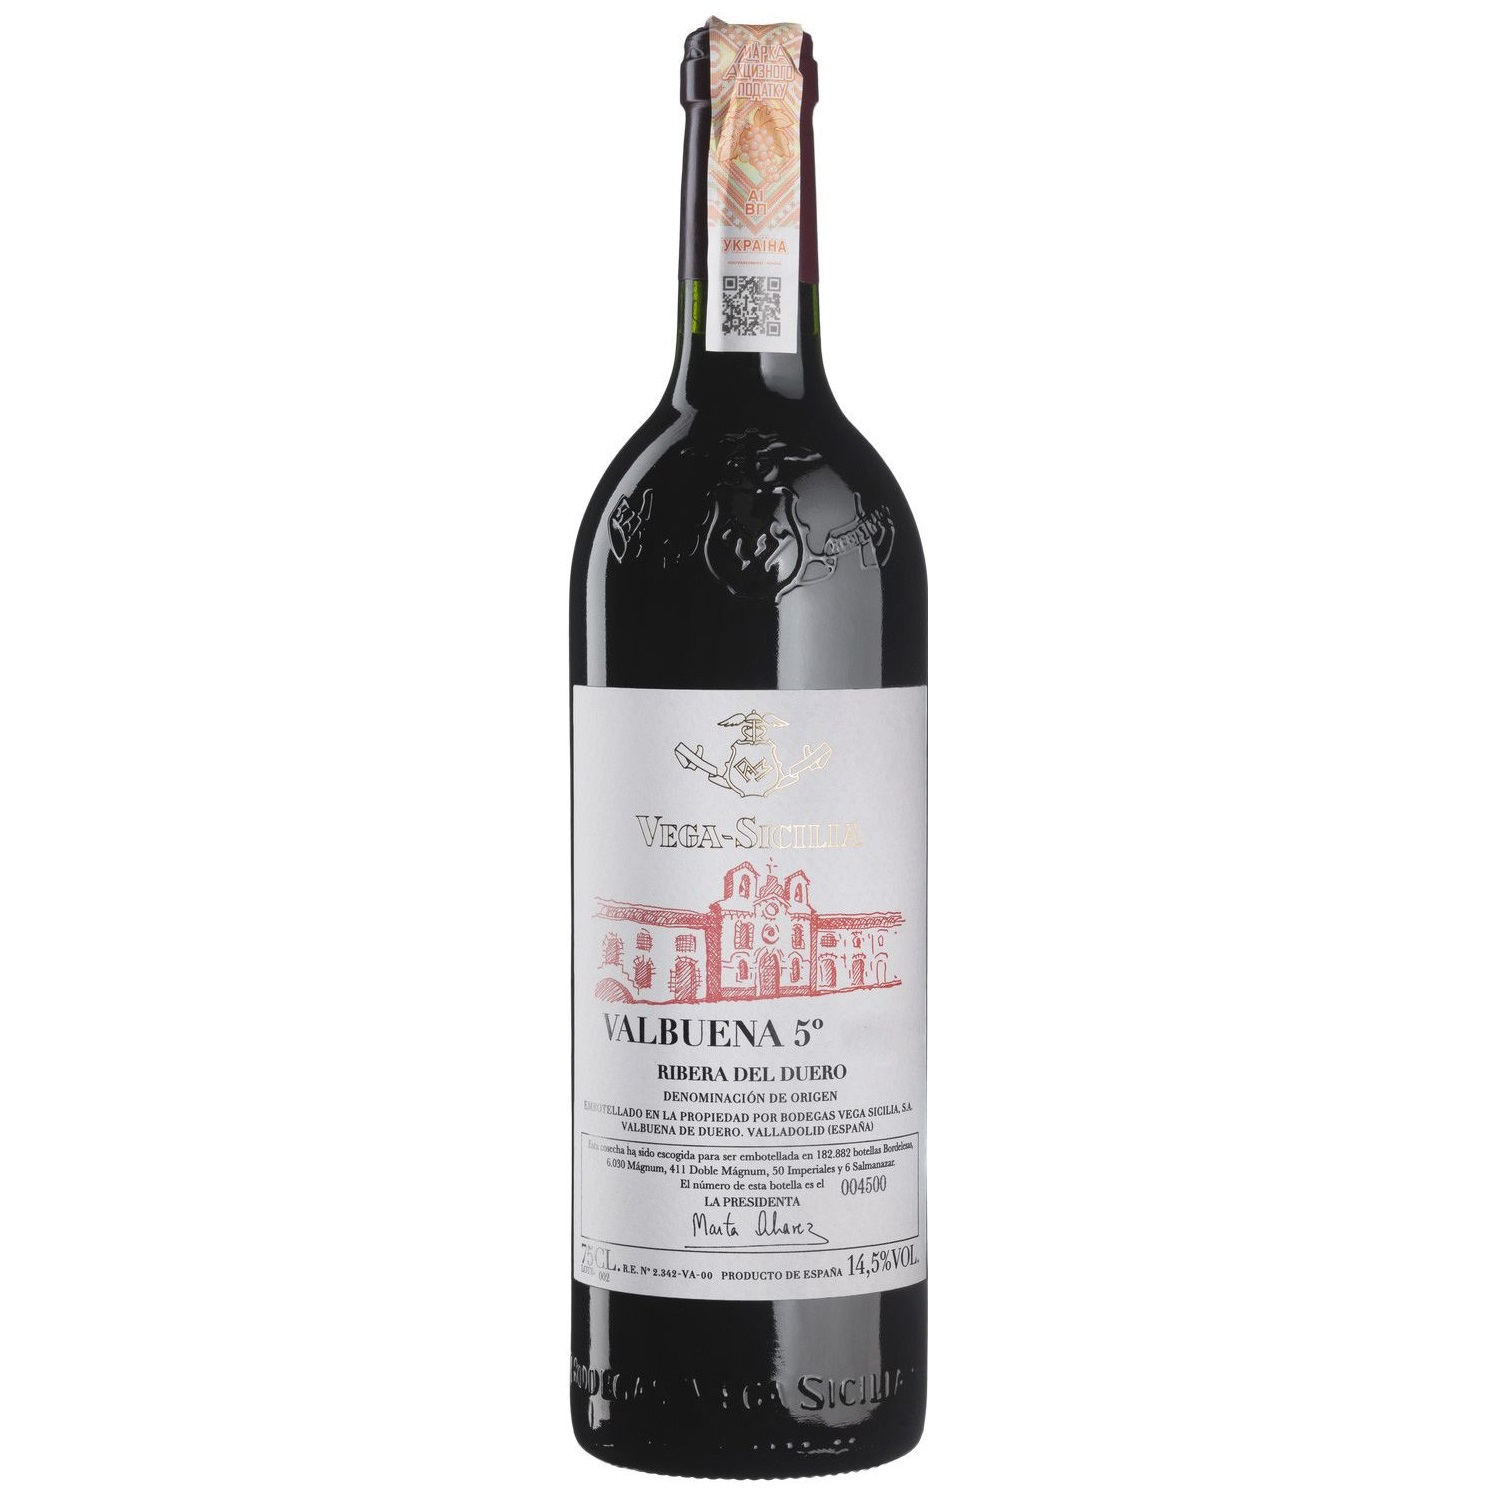 Вино Vega Sicilia Valbuena 5° 2017, красное, сухое, 0,75 л (W4900) - фото 1